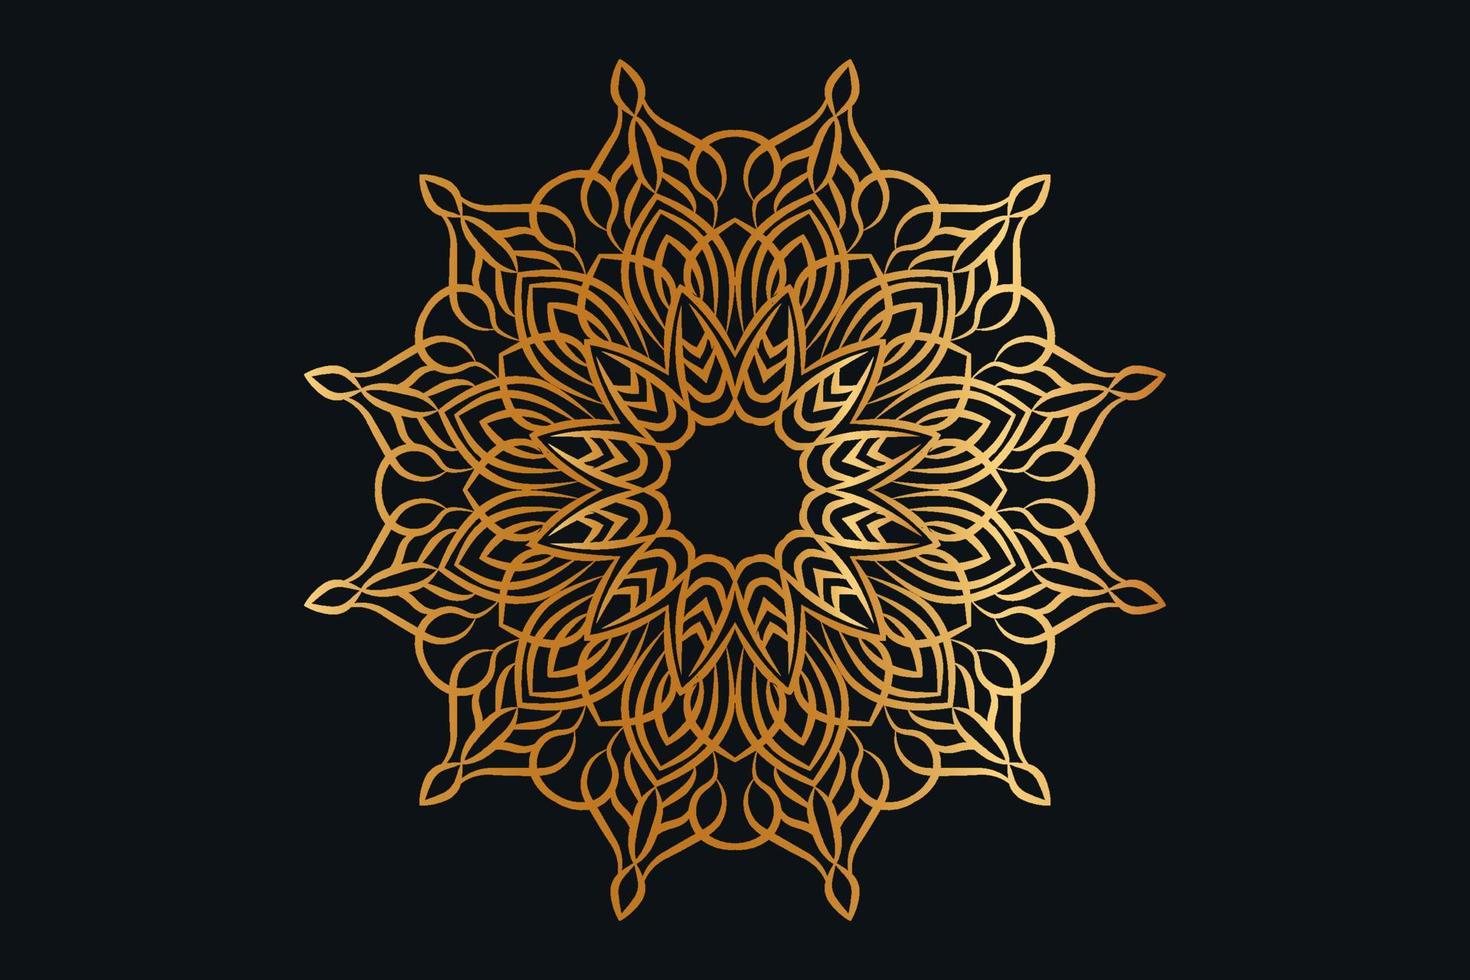 Mandala-Hintergrund-Design-Profi vektor